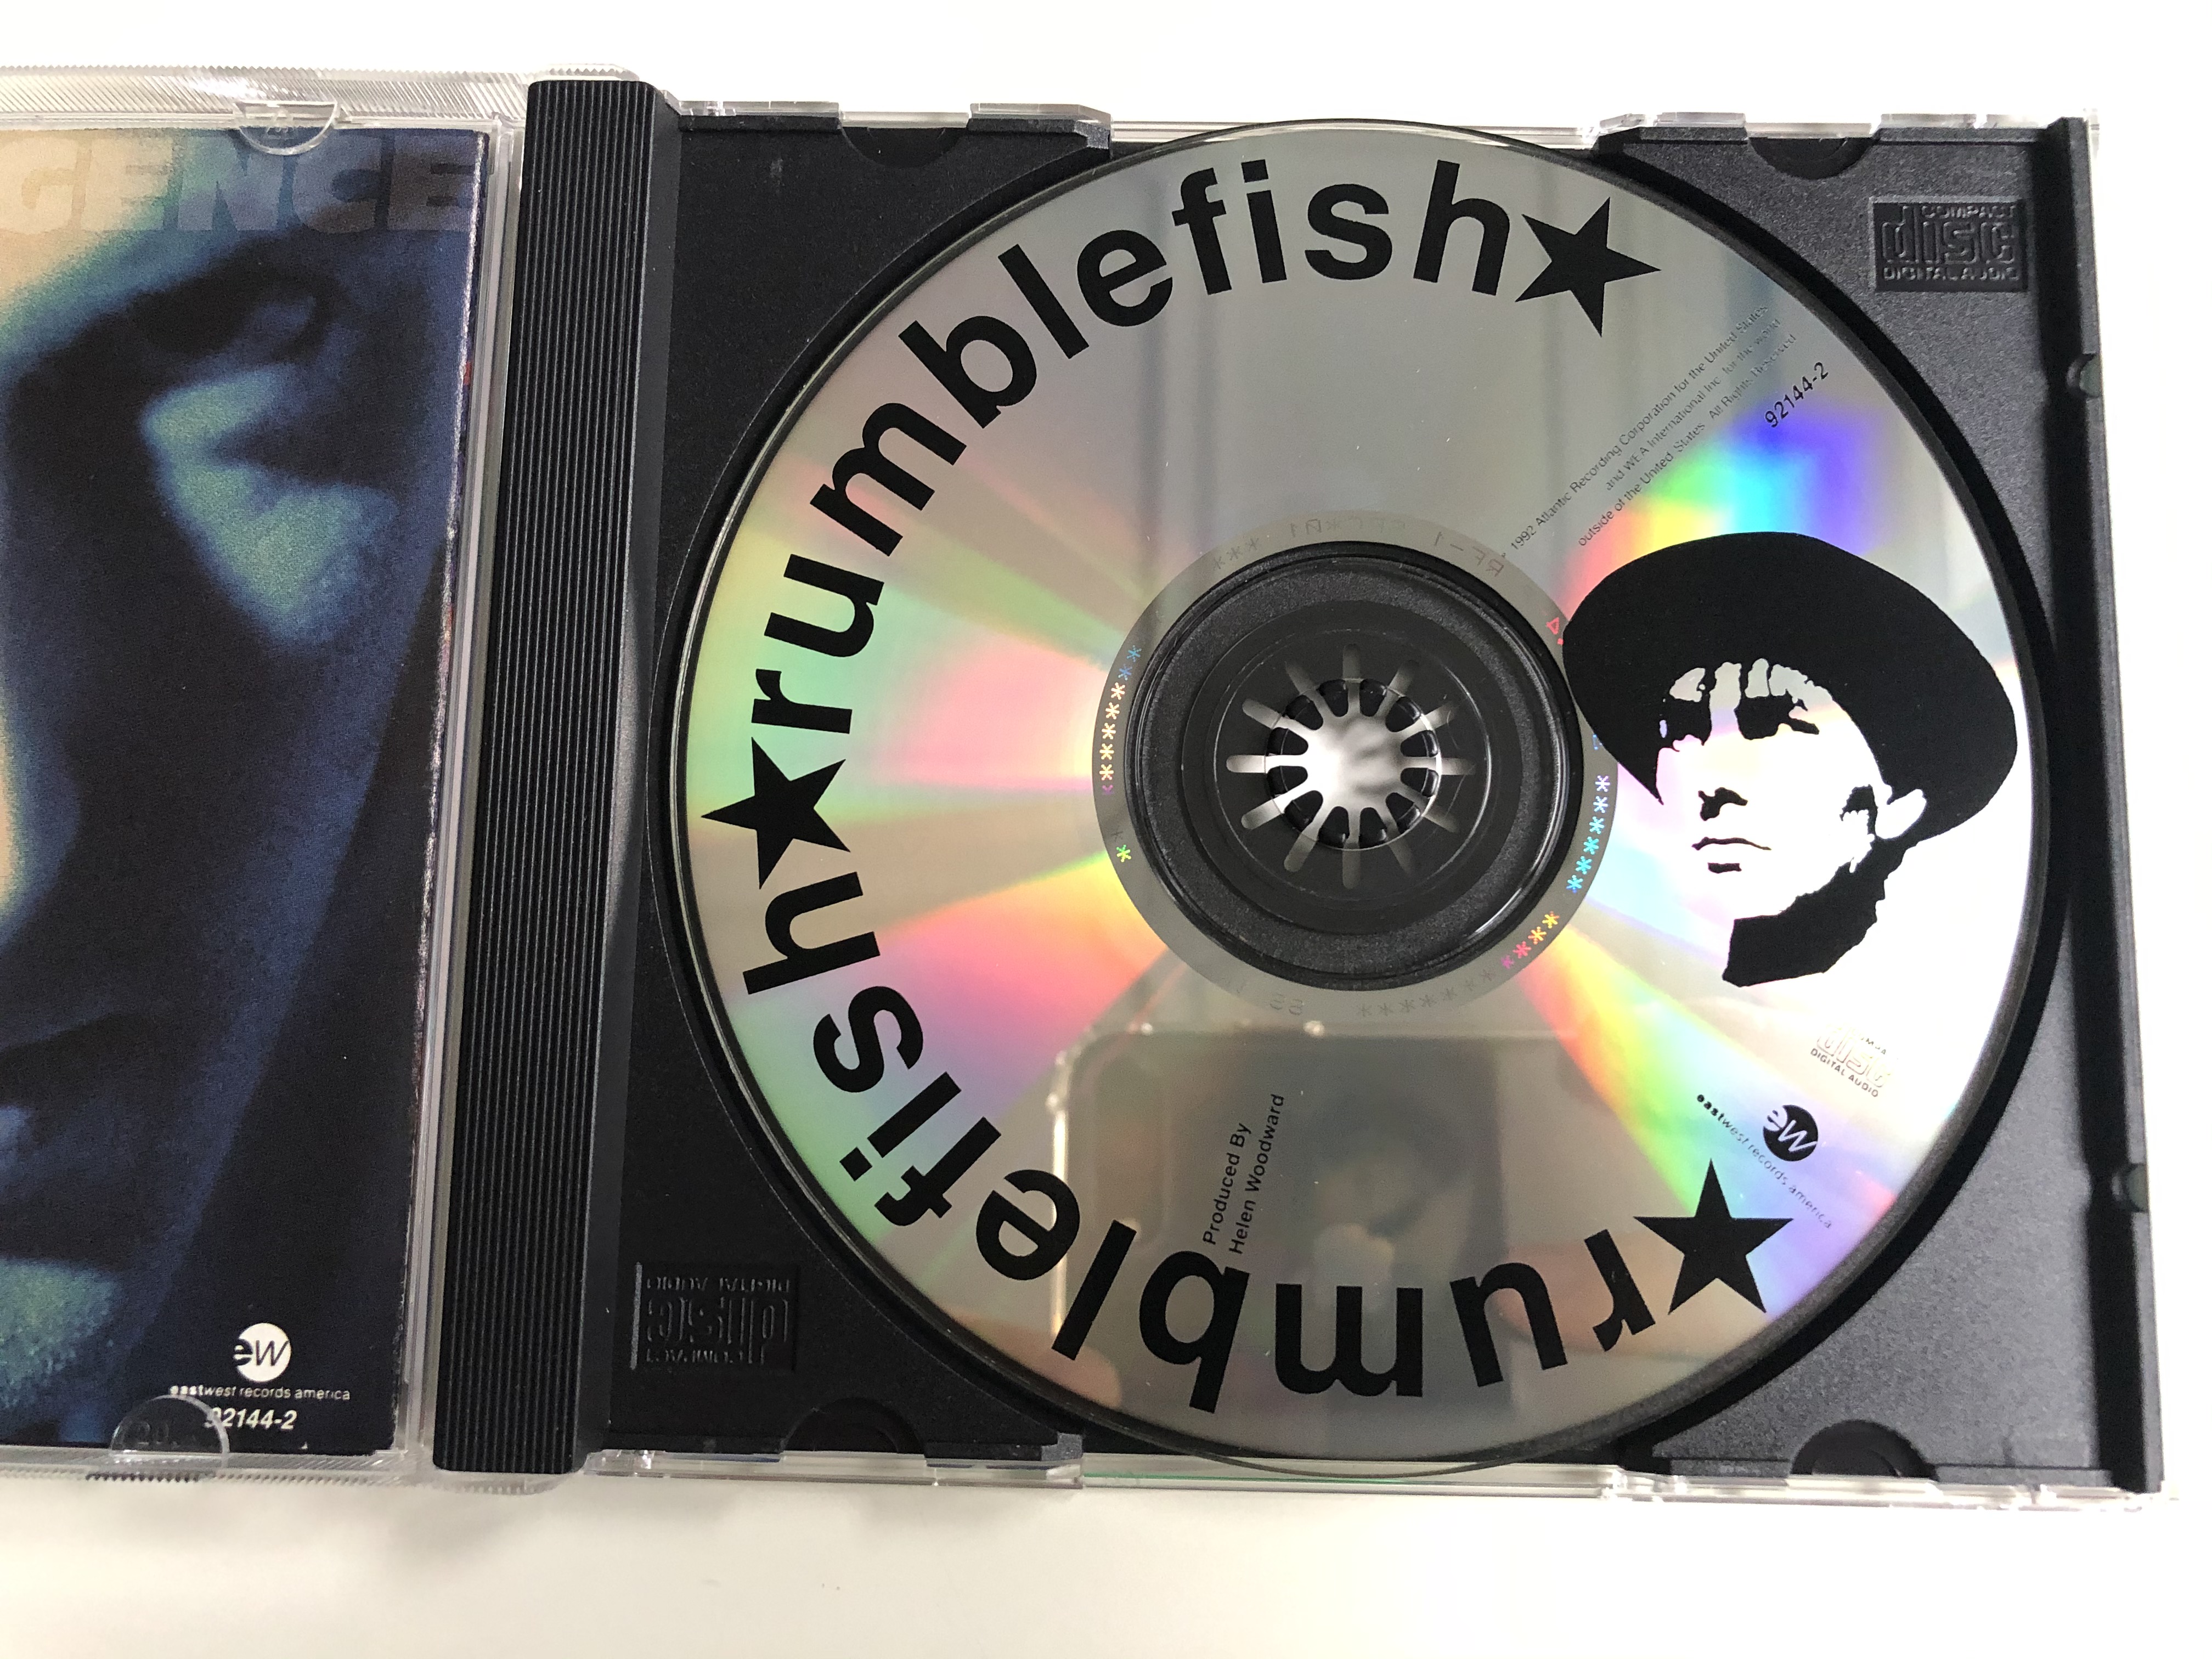 rumblefish-eastwest-records-america-audio-cd-1992-792144-2-6-.jpg